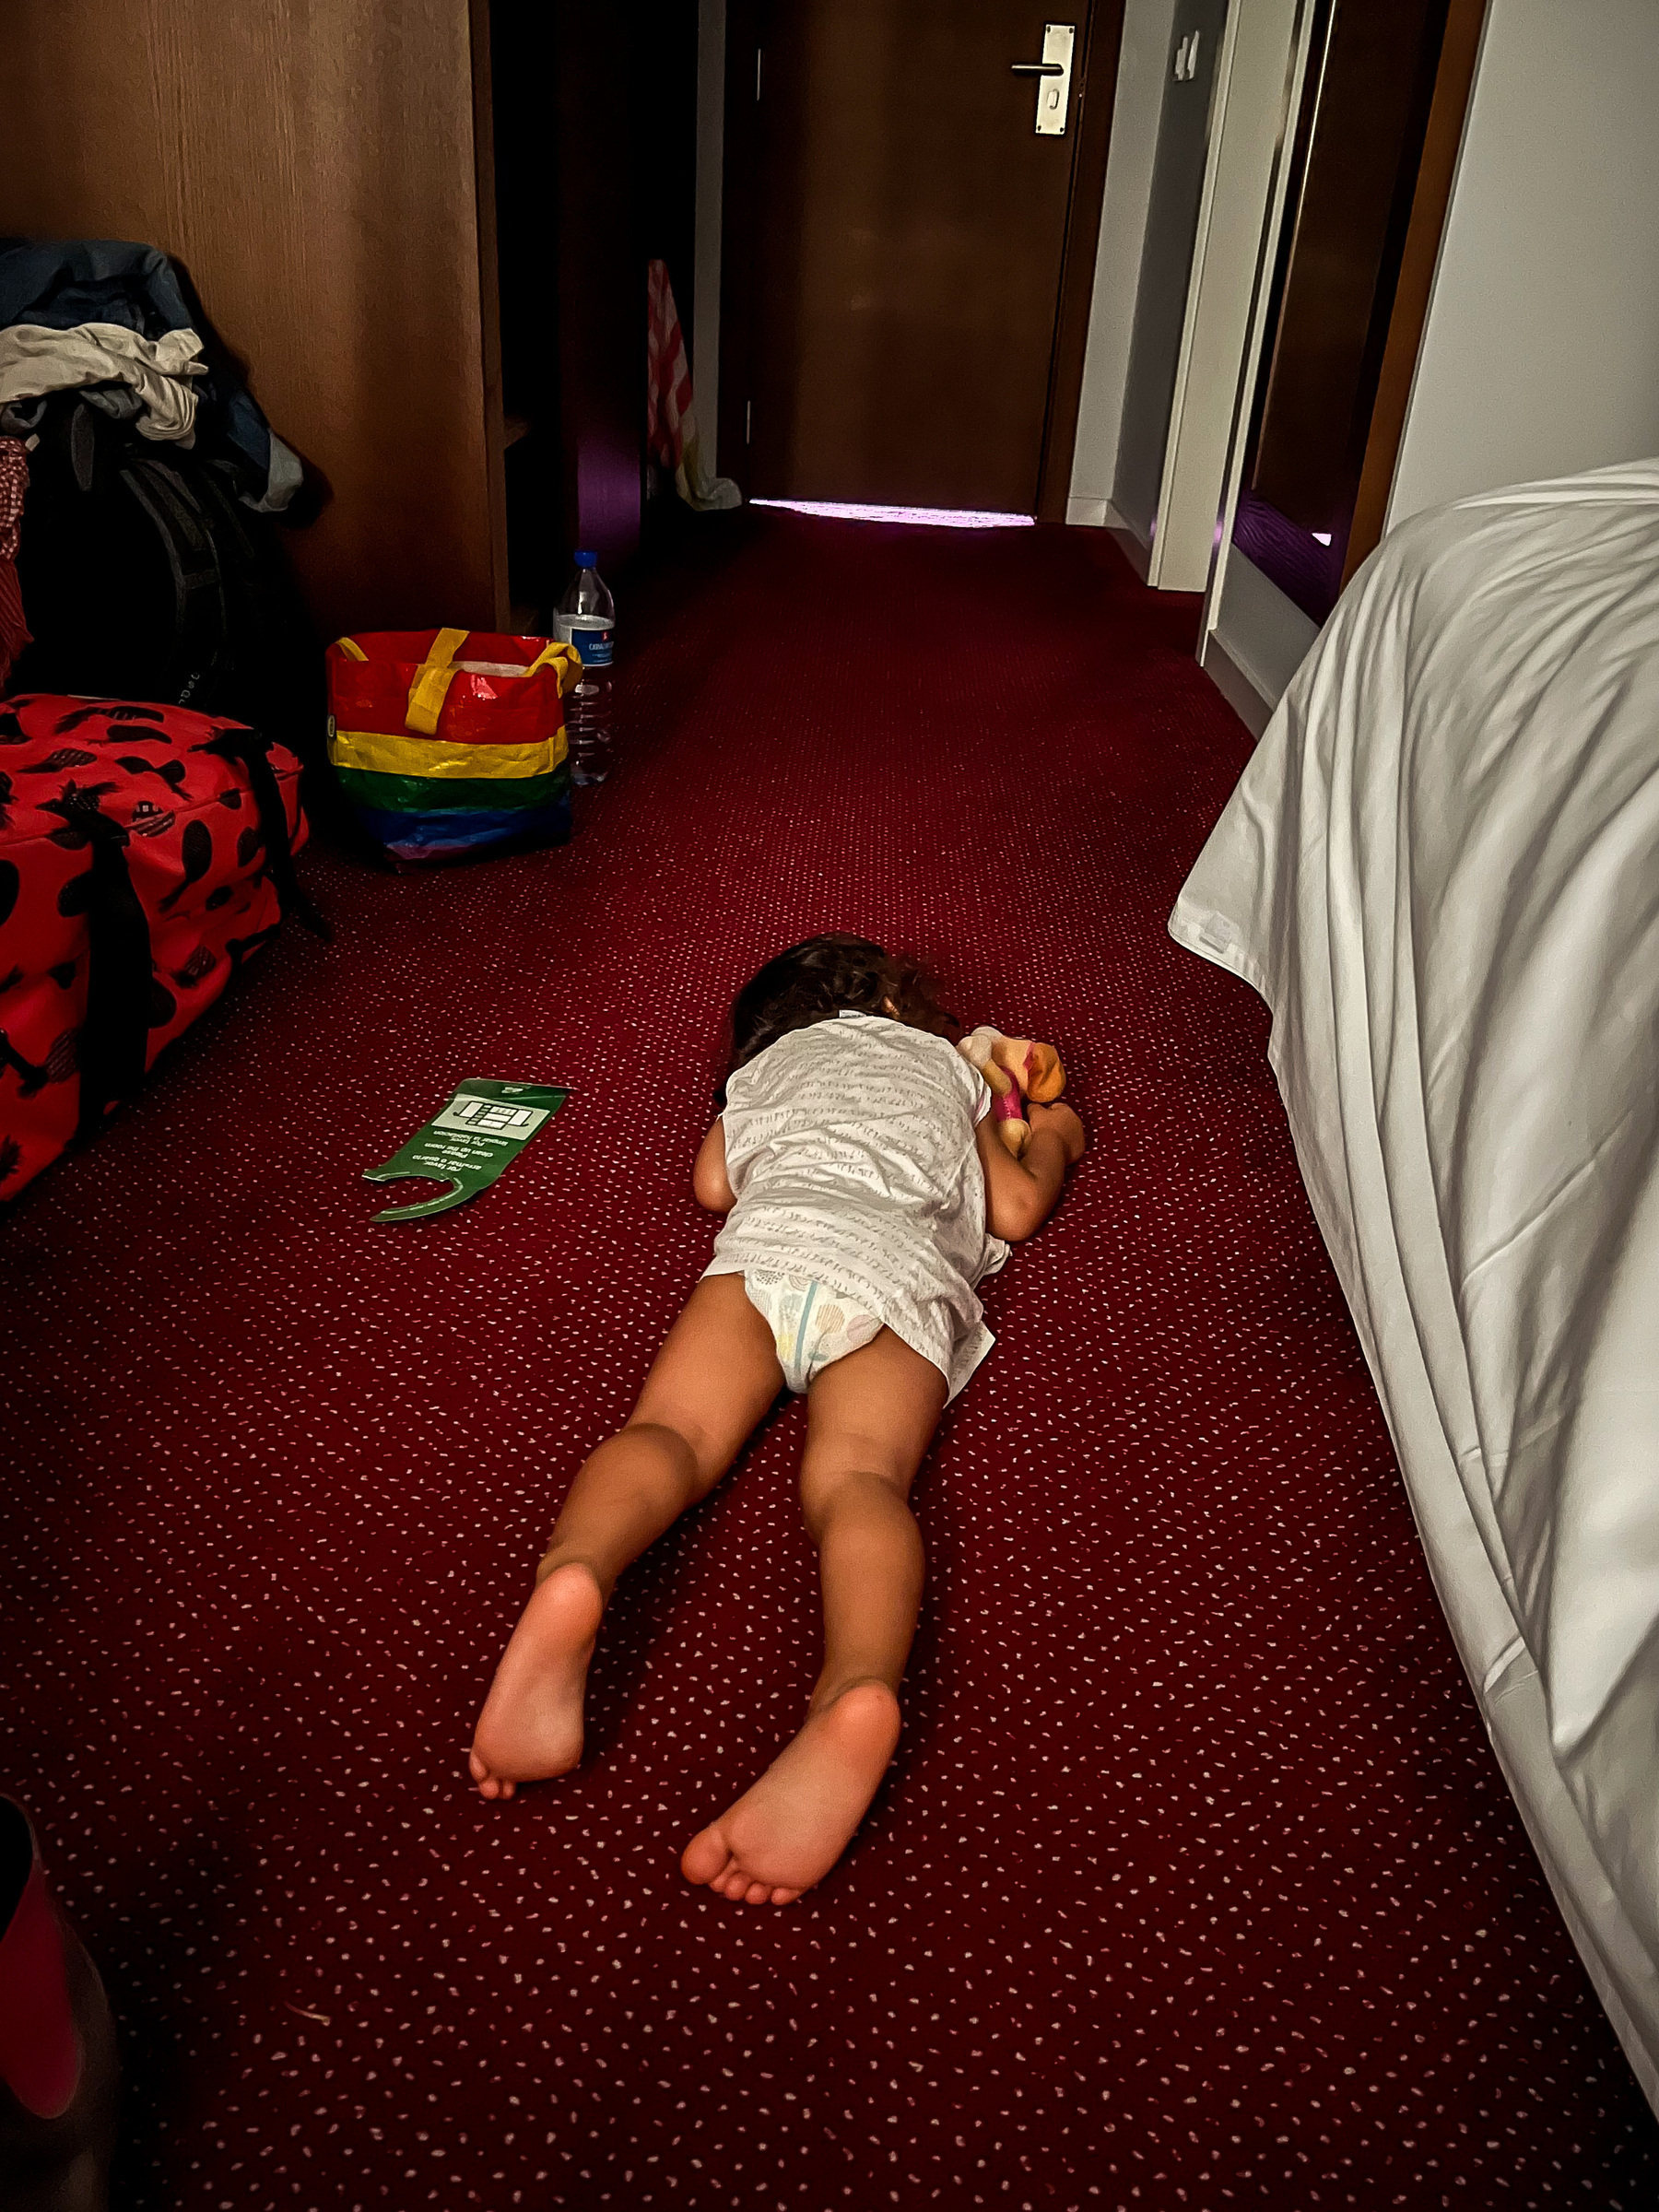 Toddler sleeping on the hotel room’s floor